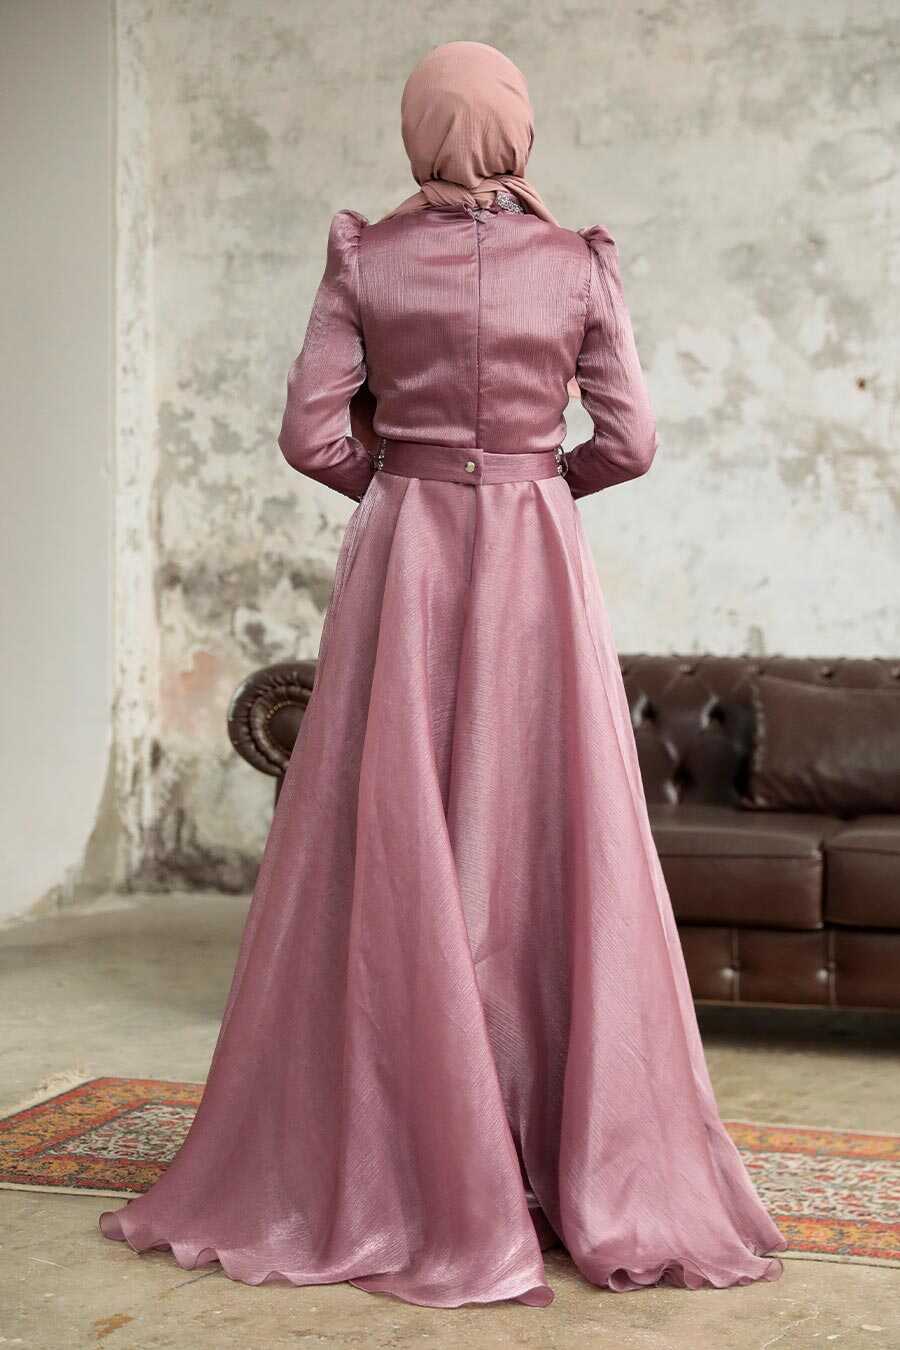 Neva Style - Luxury Dusty Rose Muslim Evening Gown 3774GK